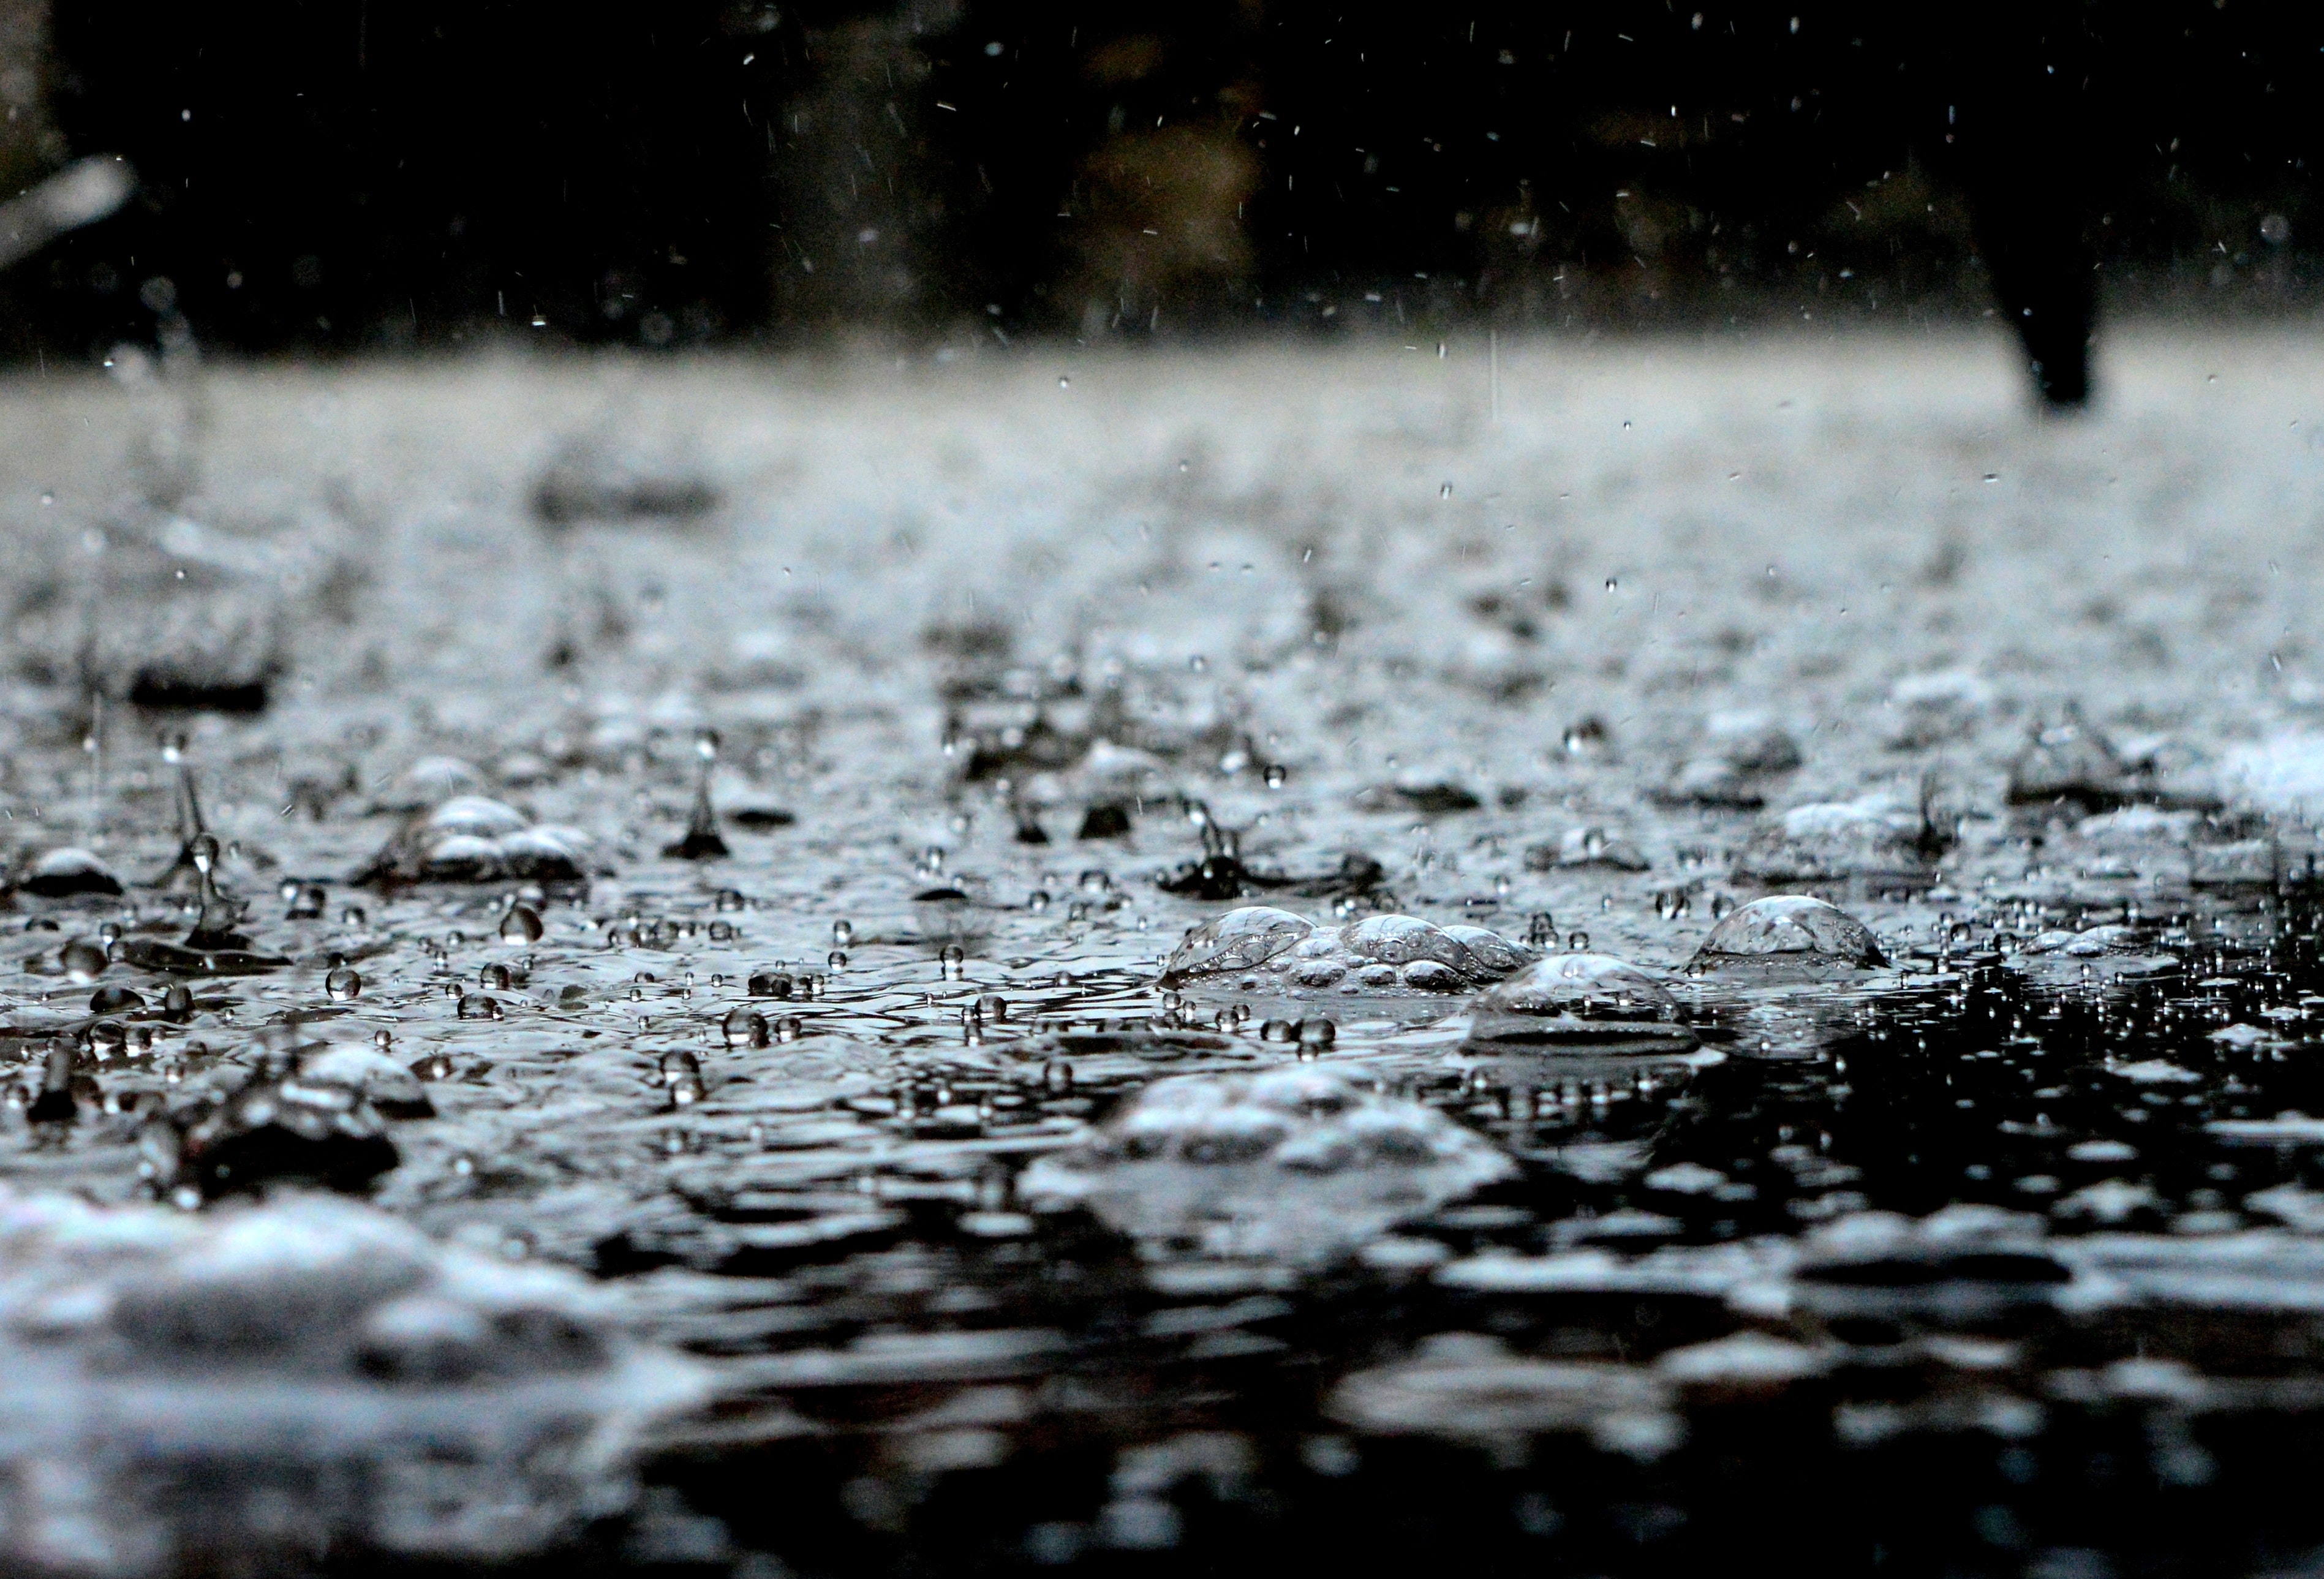 Photograph of rainfall